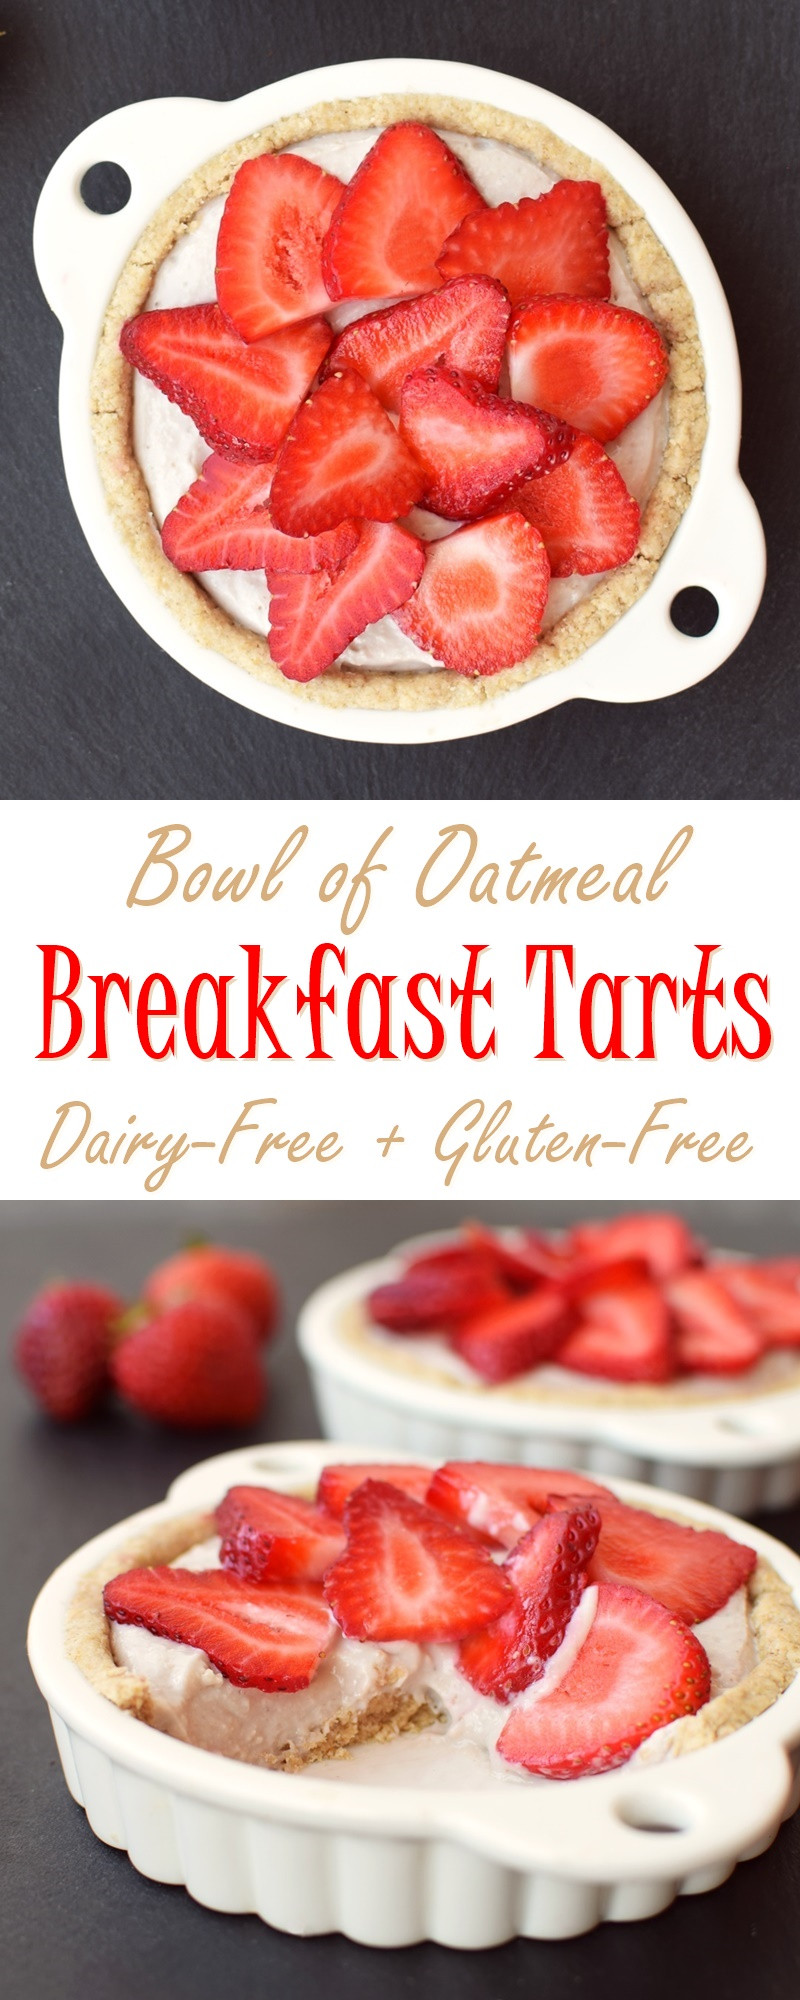 Healthy Dairy Free Breakfast
 Dairy Free Breakfast Tarts Recipe with Oatmeal Crust